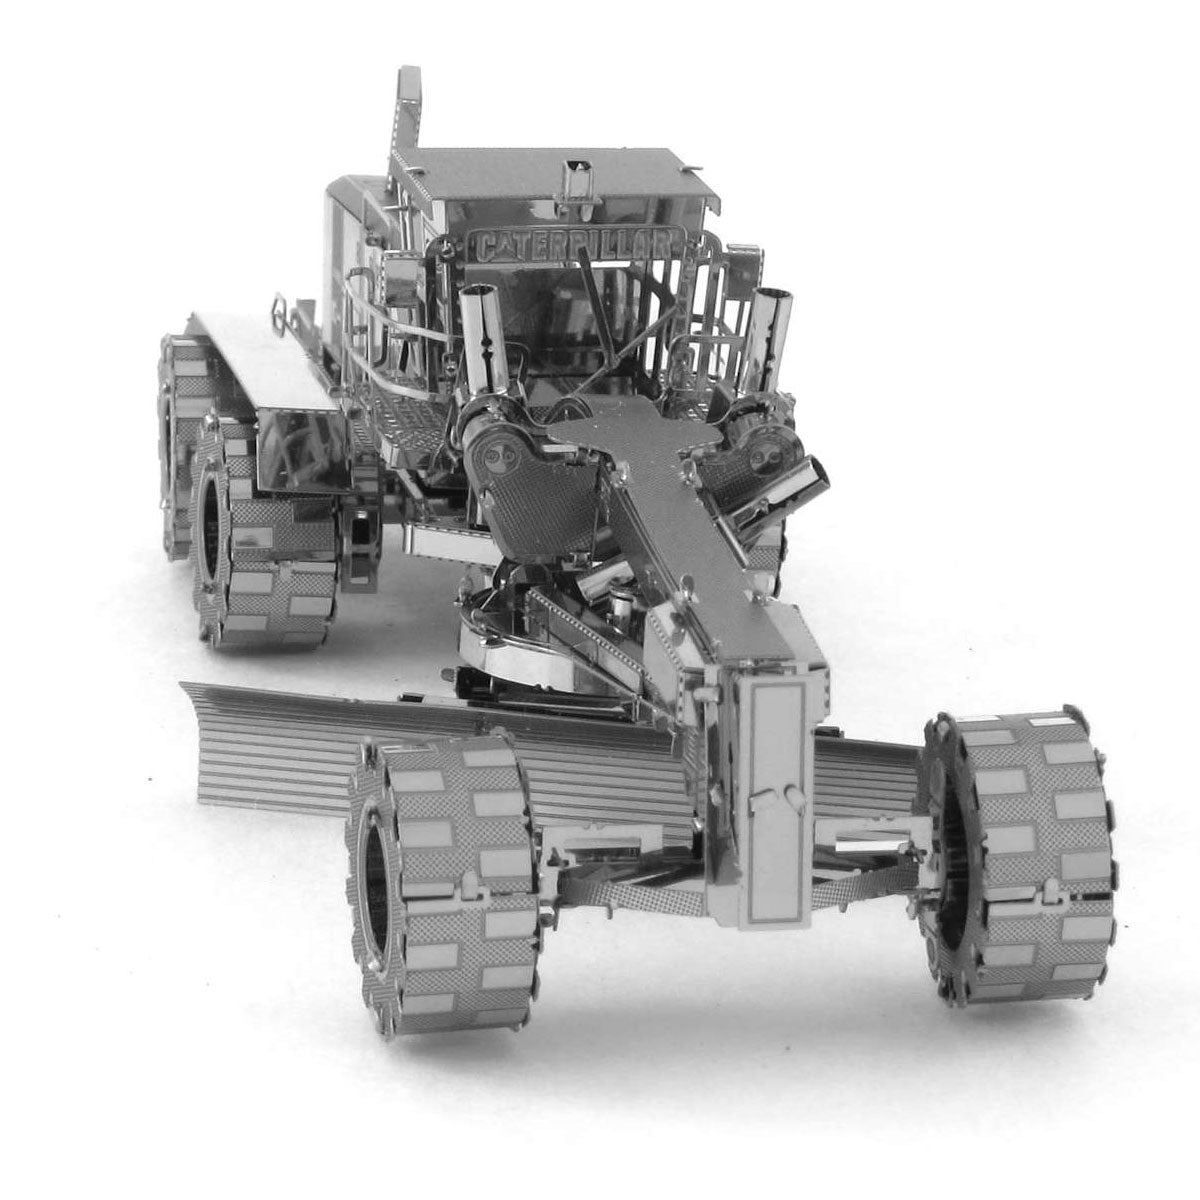 FMW421 Motor Grader (Buildable) 